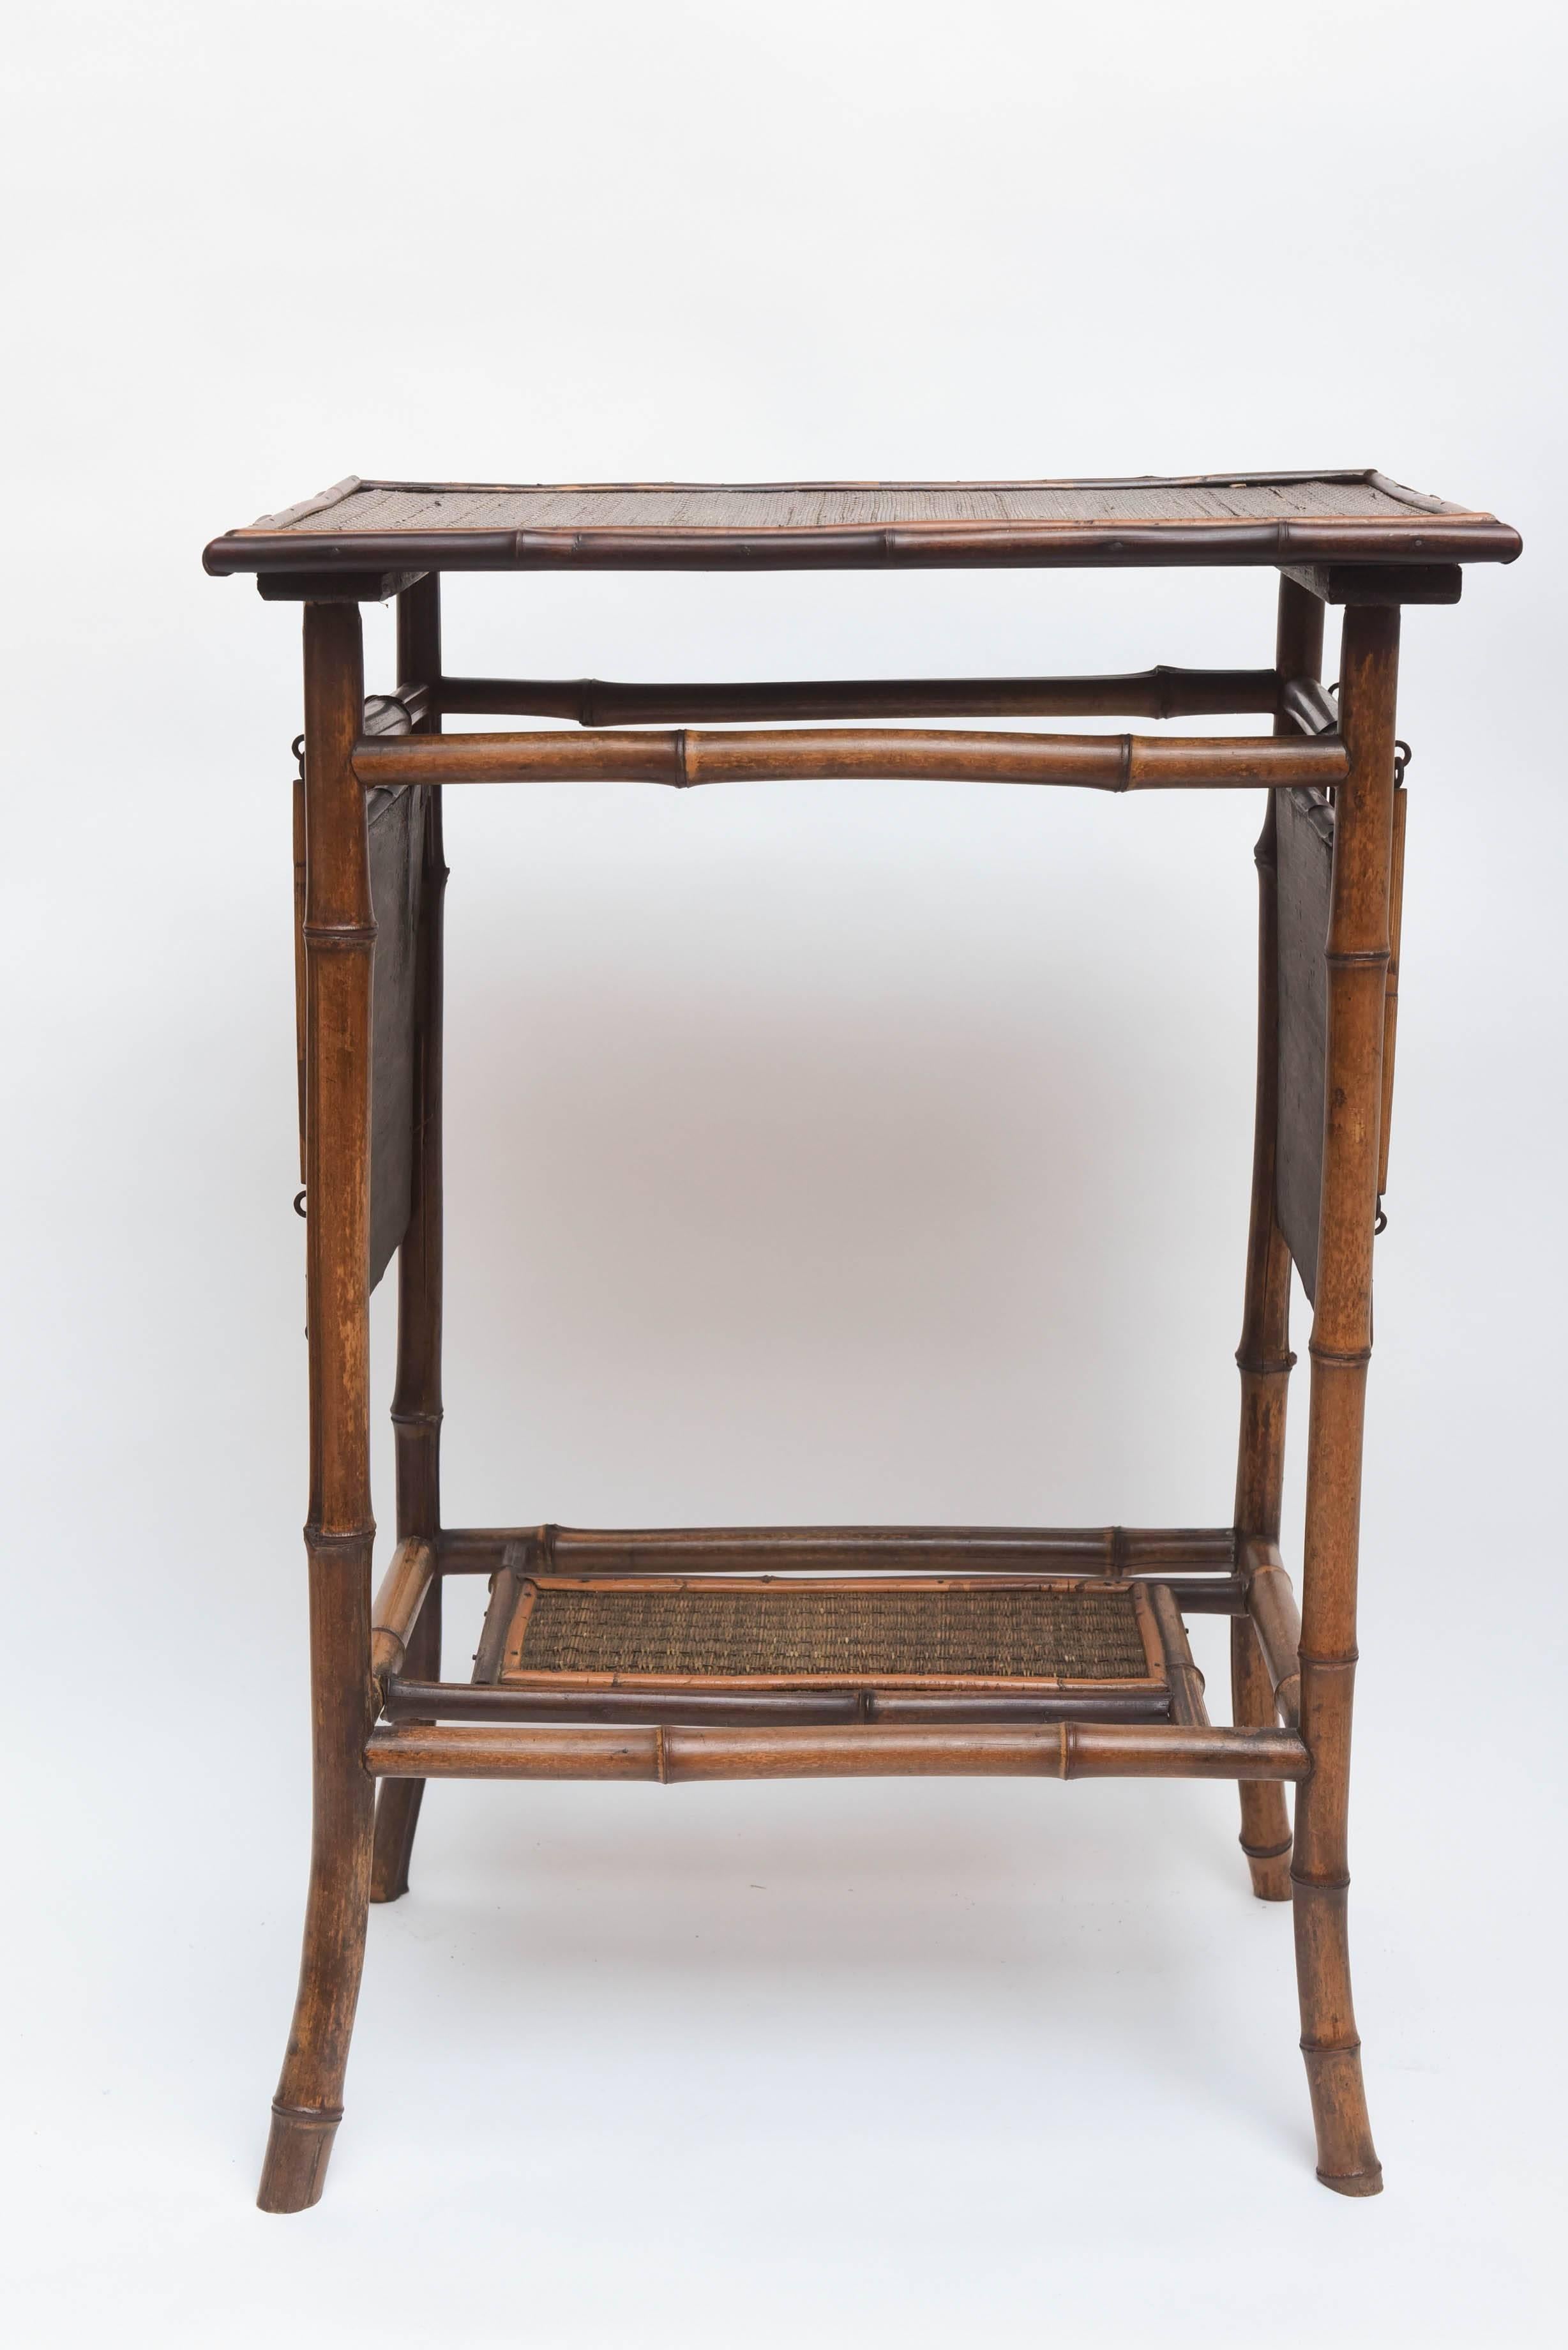 Rare 19th Century English Bamboo Tea Table Signed James Shoolbred, London 6